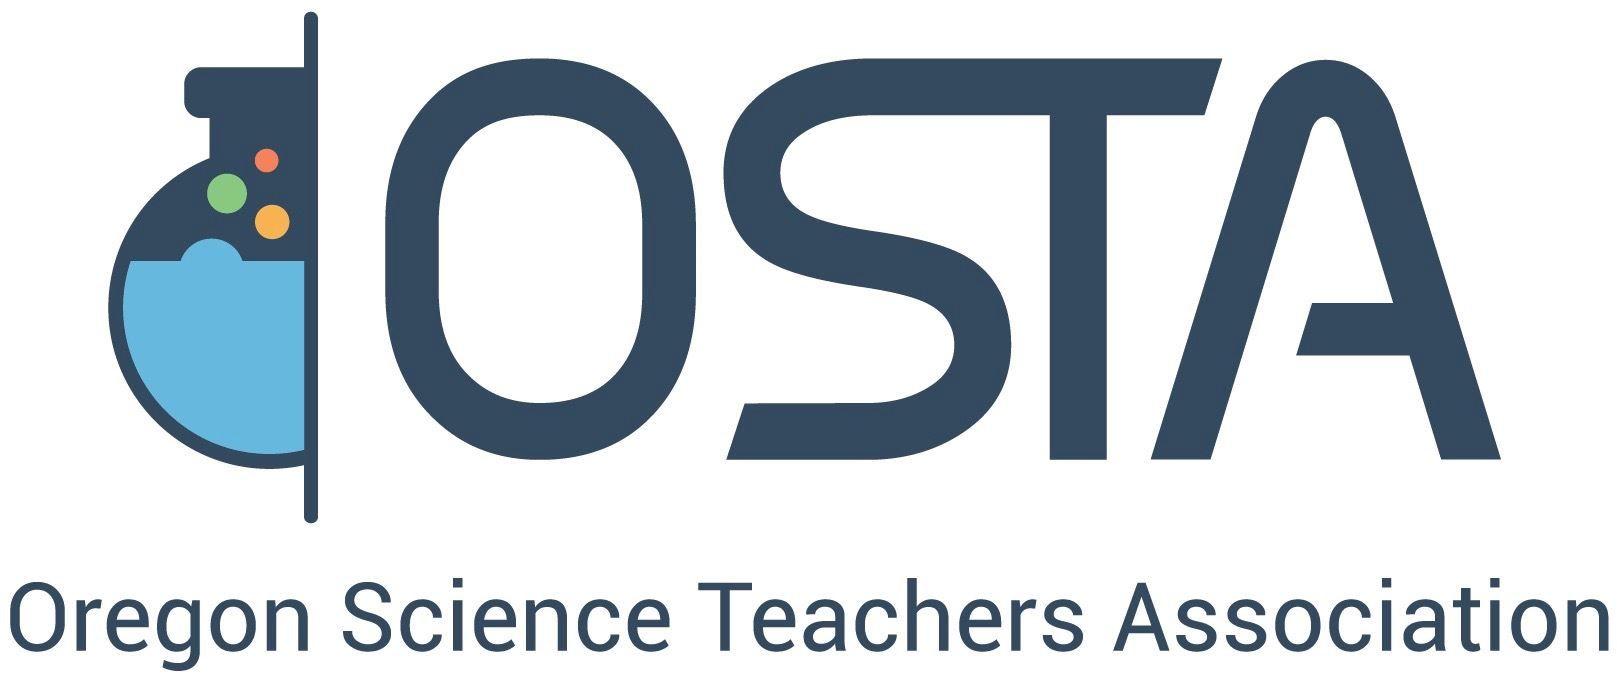 Contest Logo - Oregon Science Teachers Association - Logo Contest